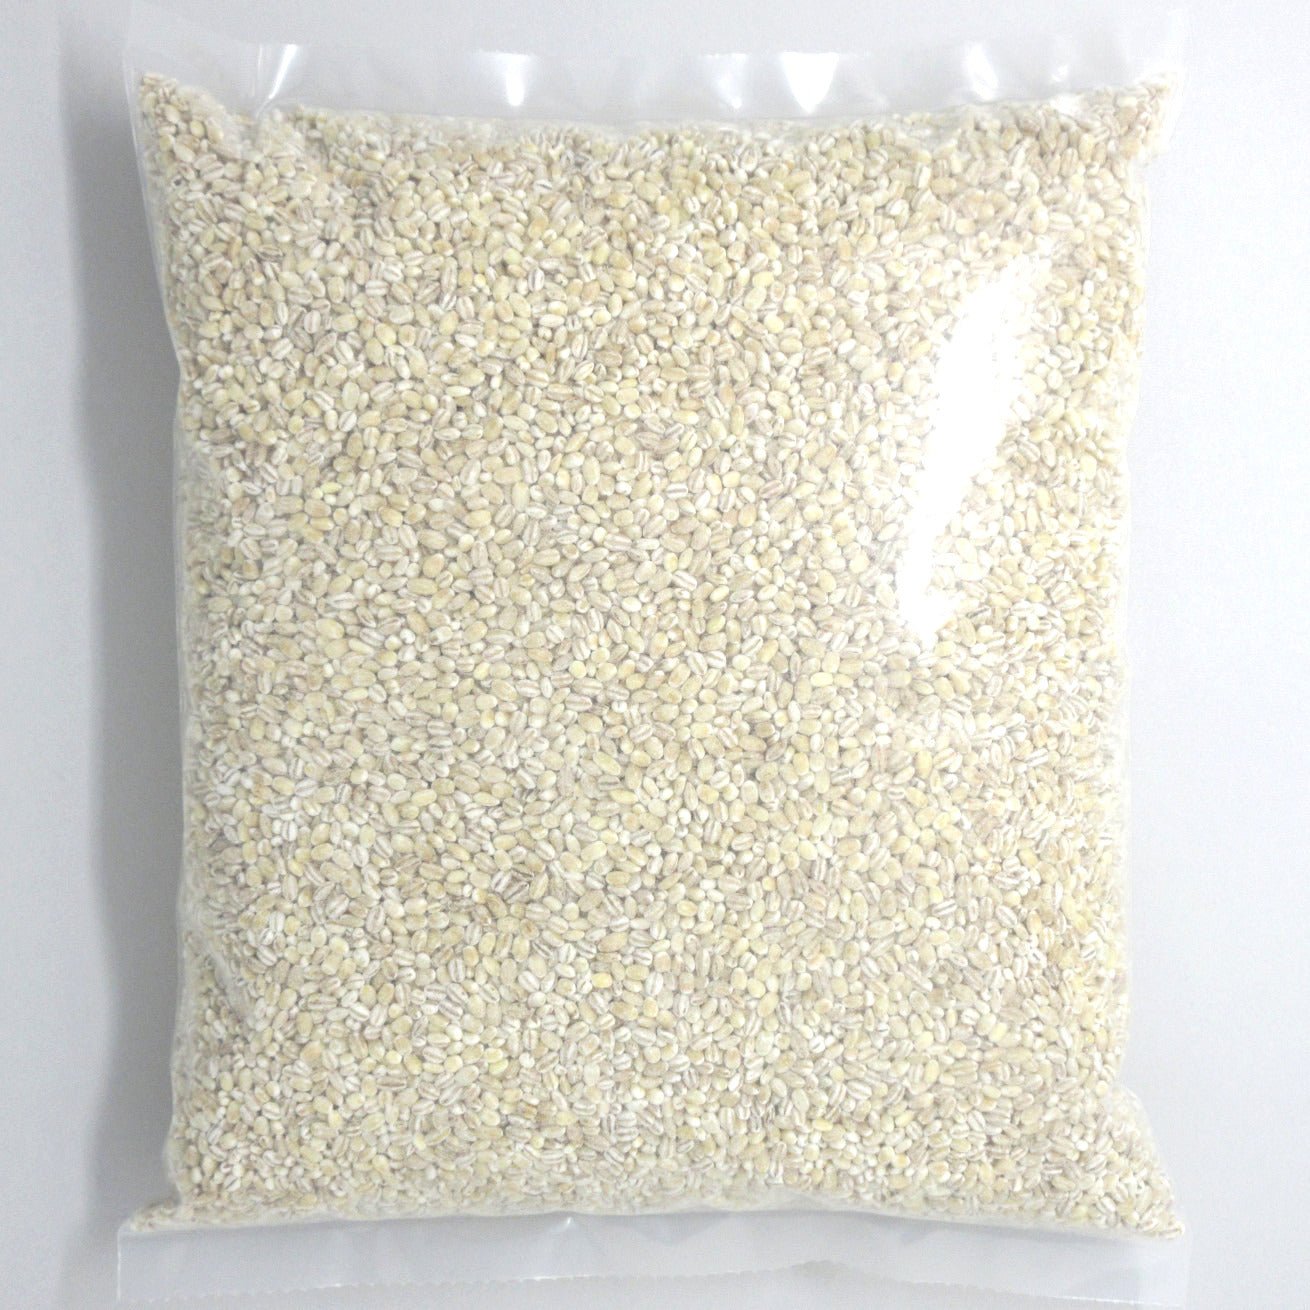 Flour Barrel product image - Pearl Barley